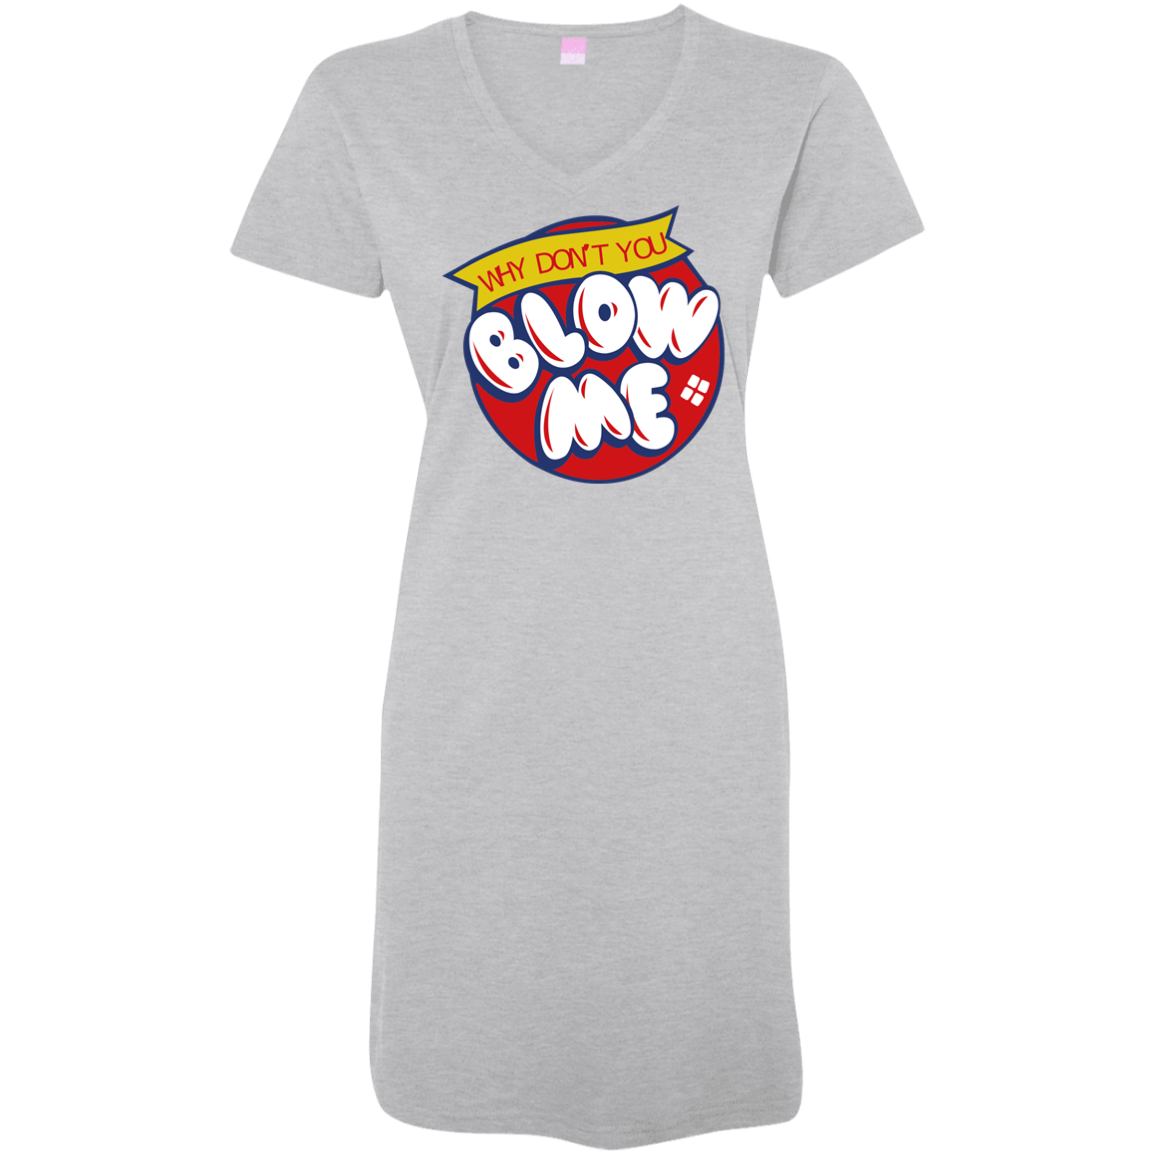 Blow Me - V Neck Tshirt Dress